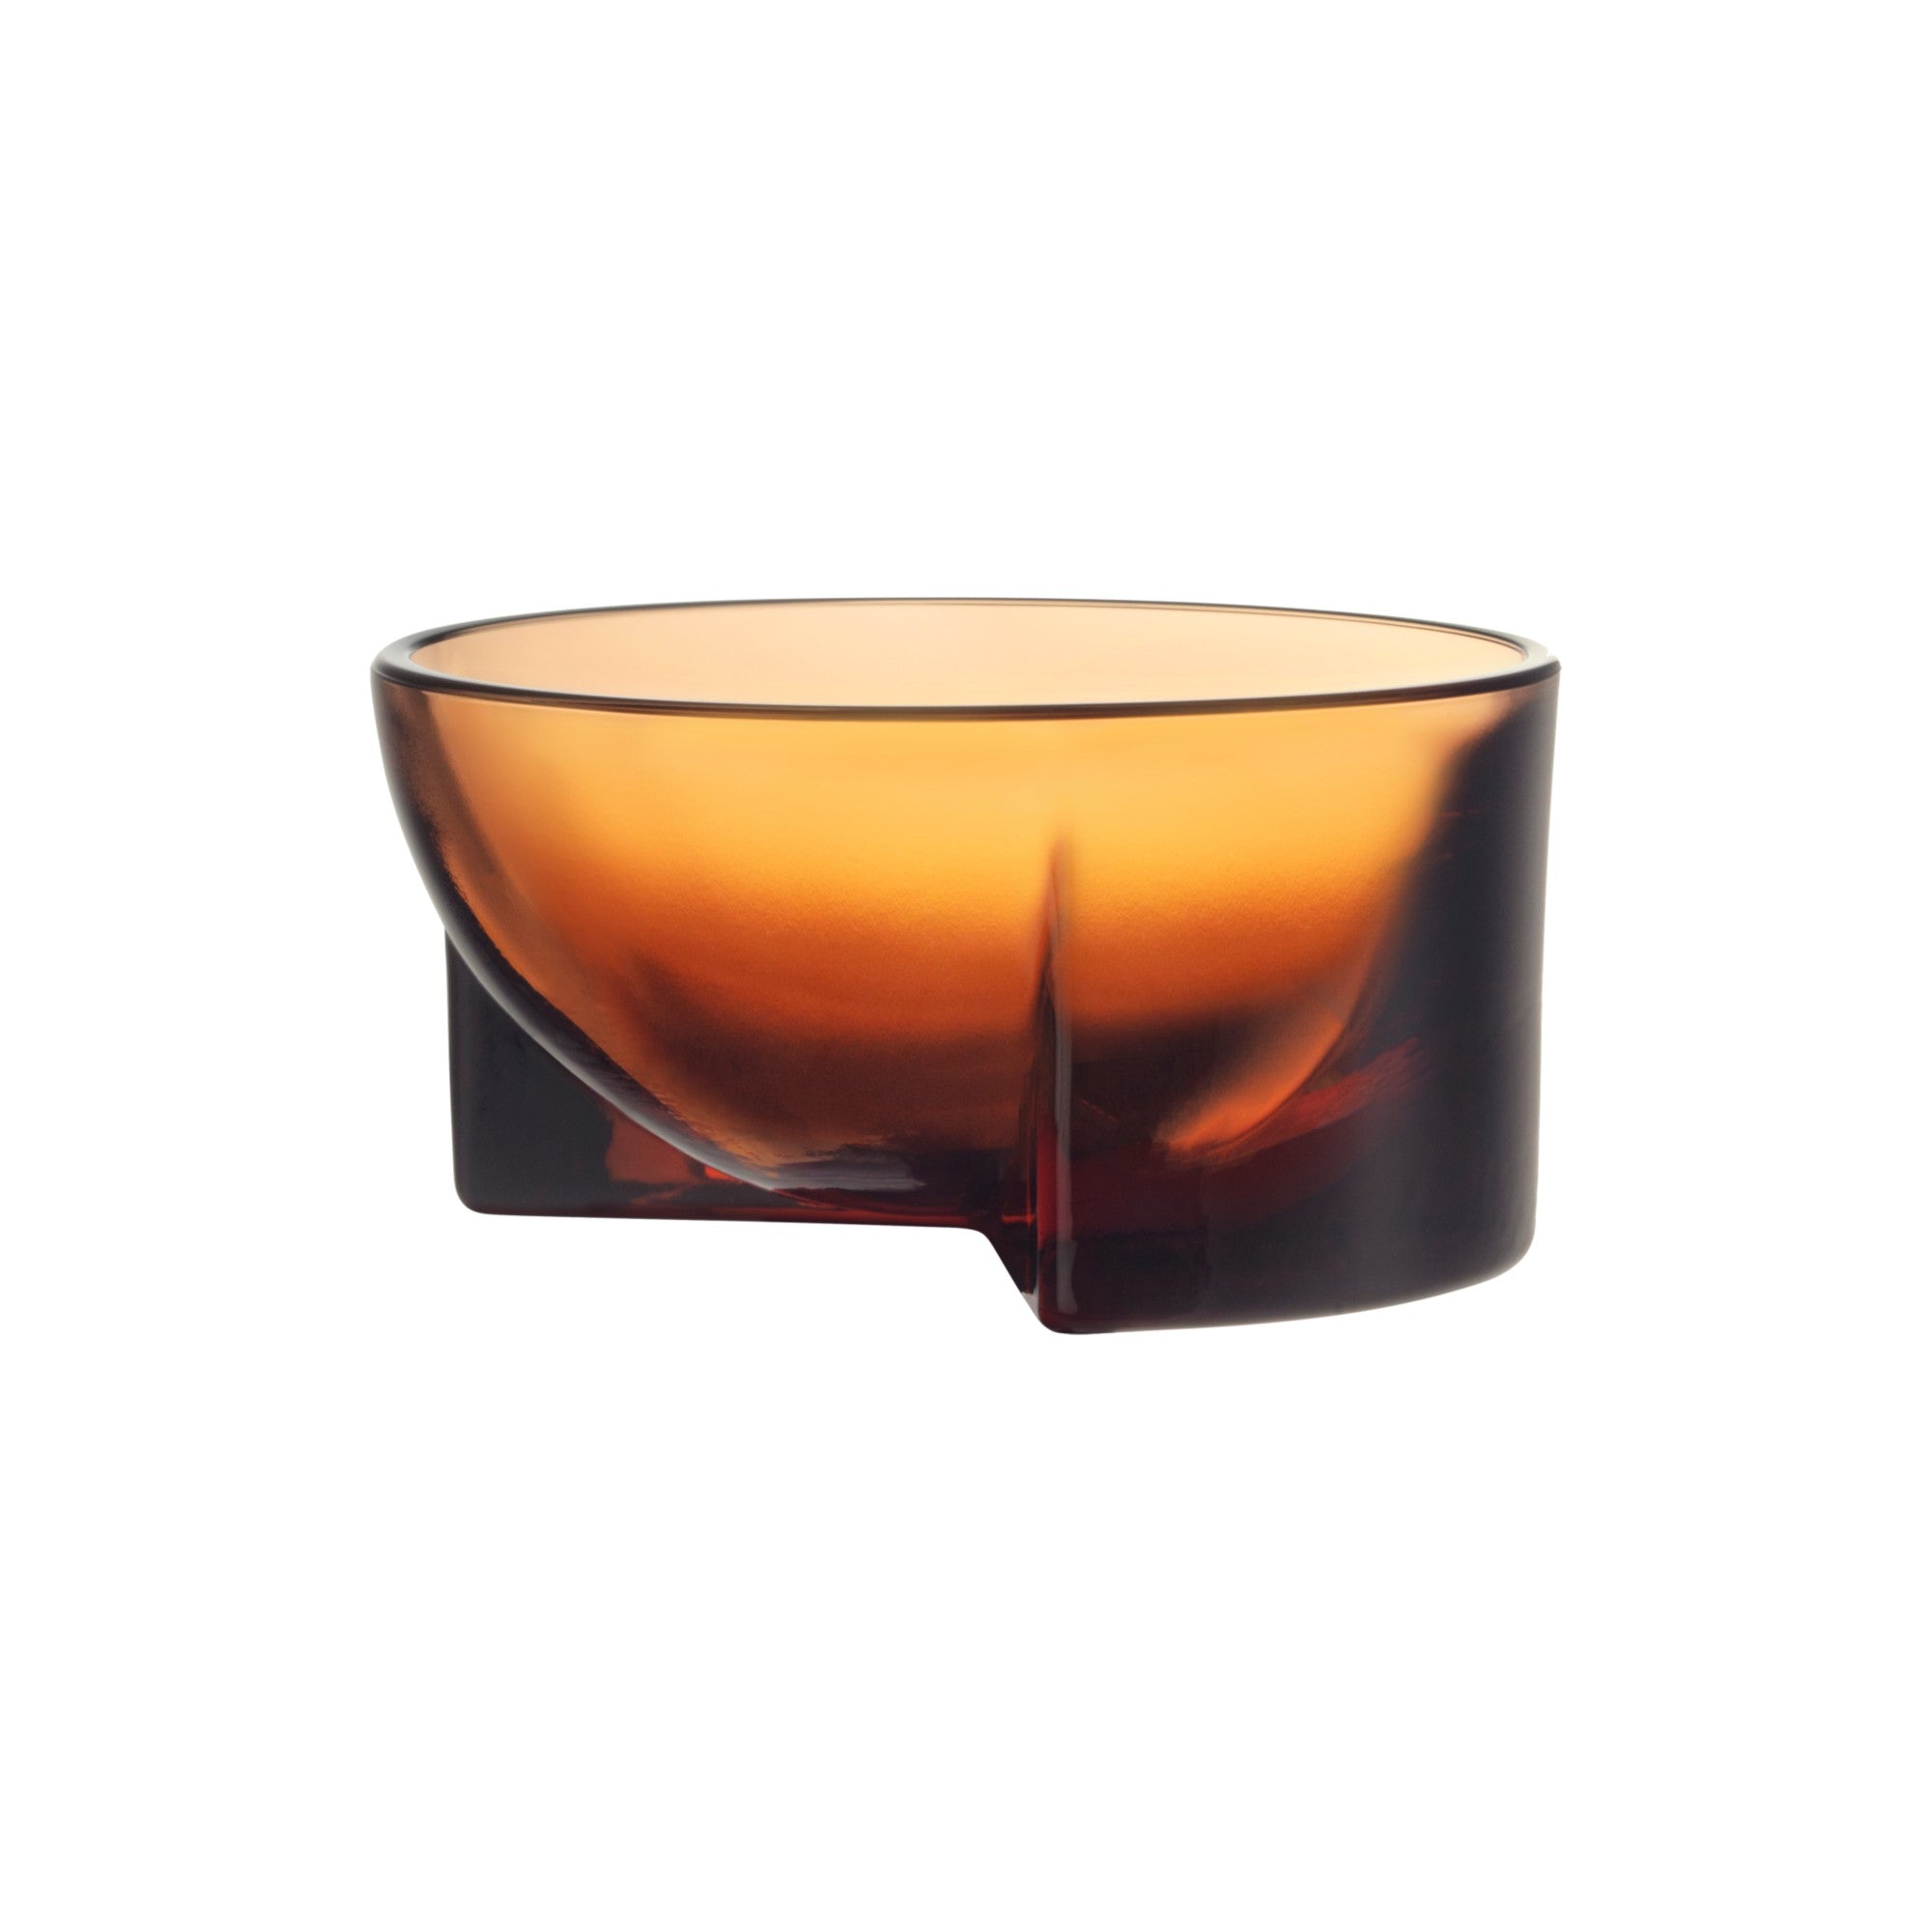 Kuru interior bowl 130 x 60 mm seville orange